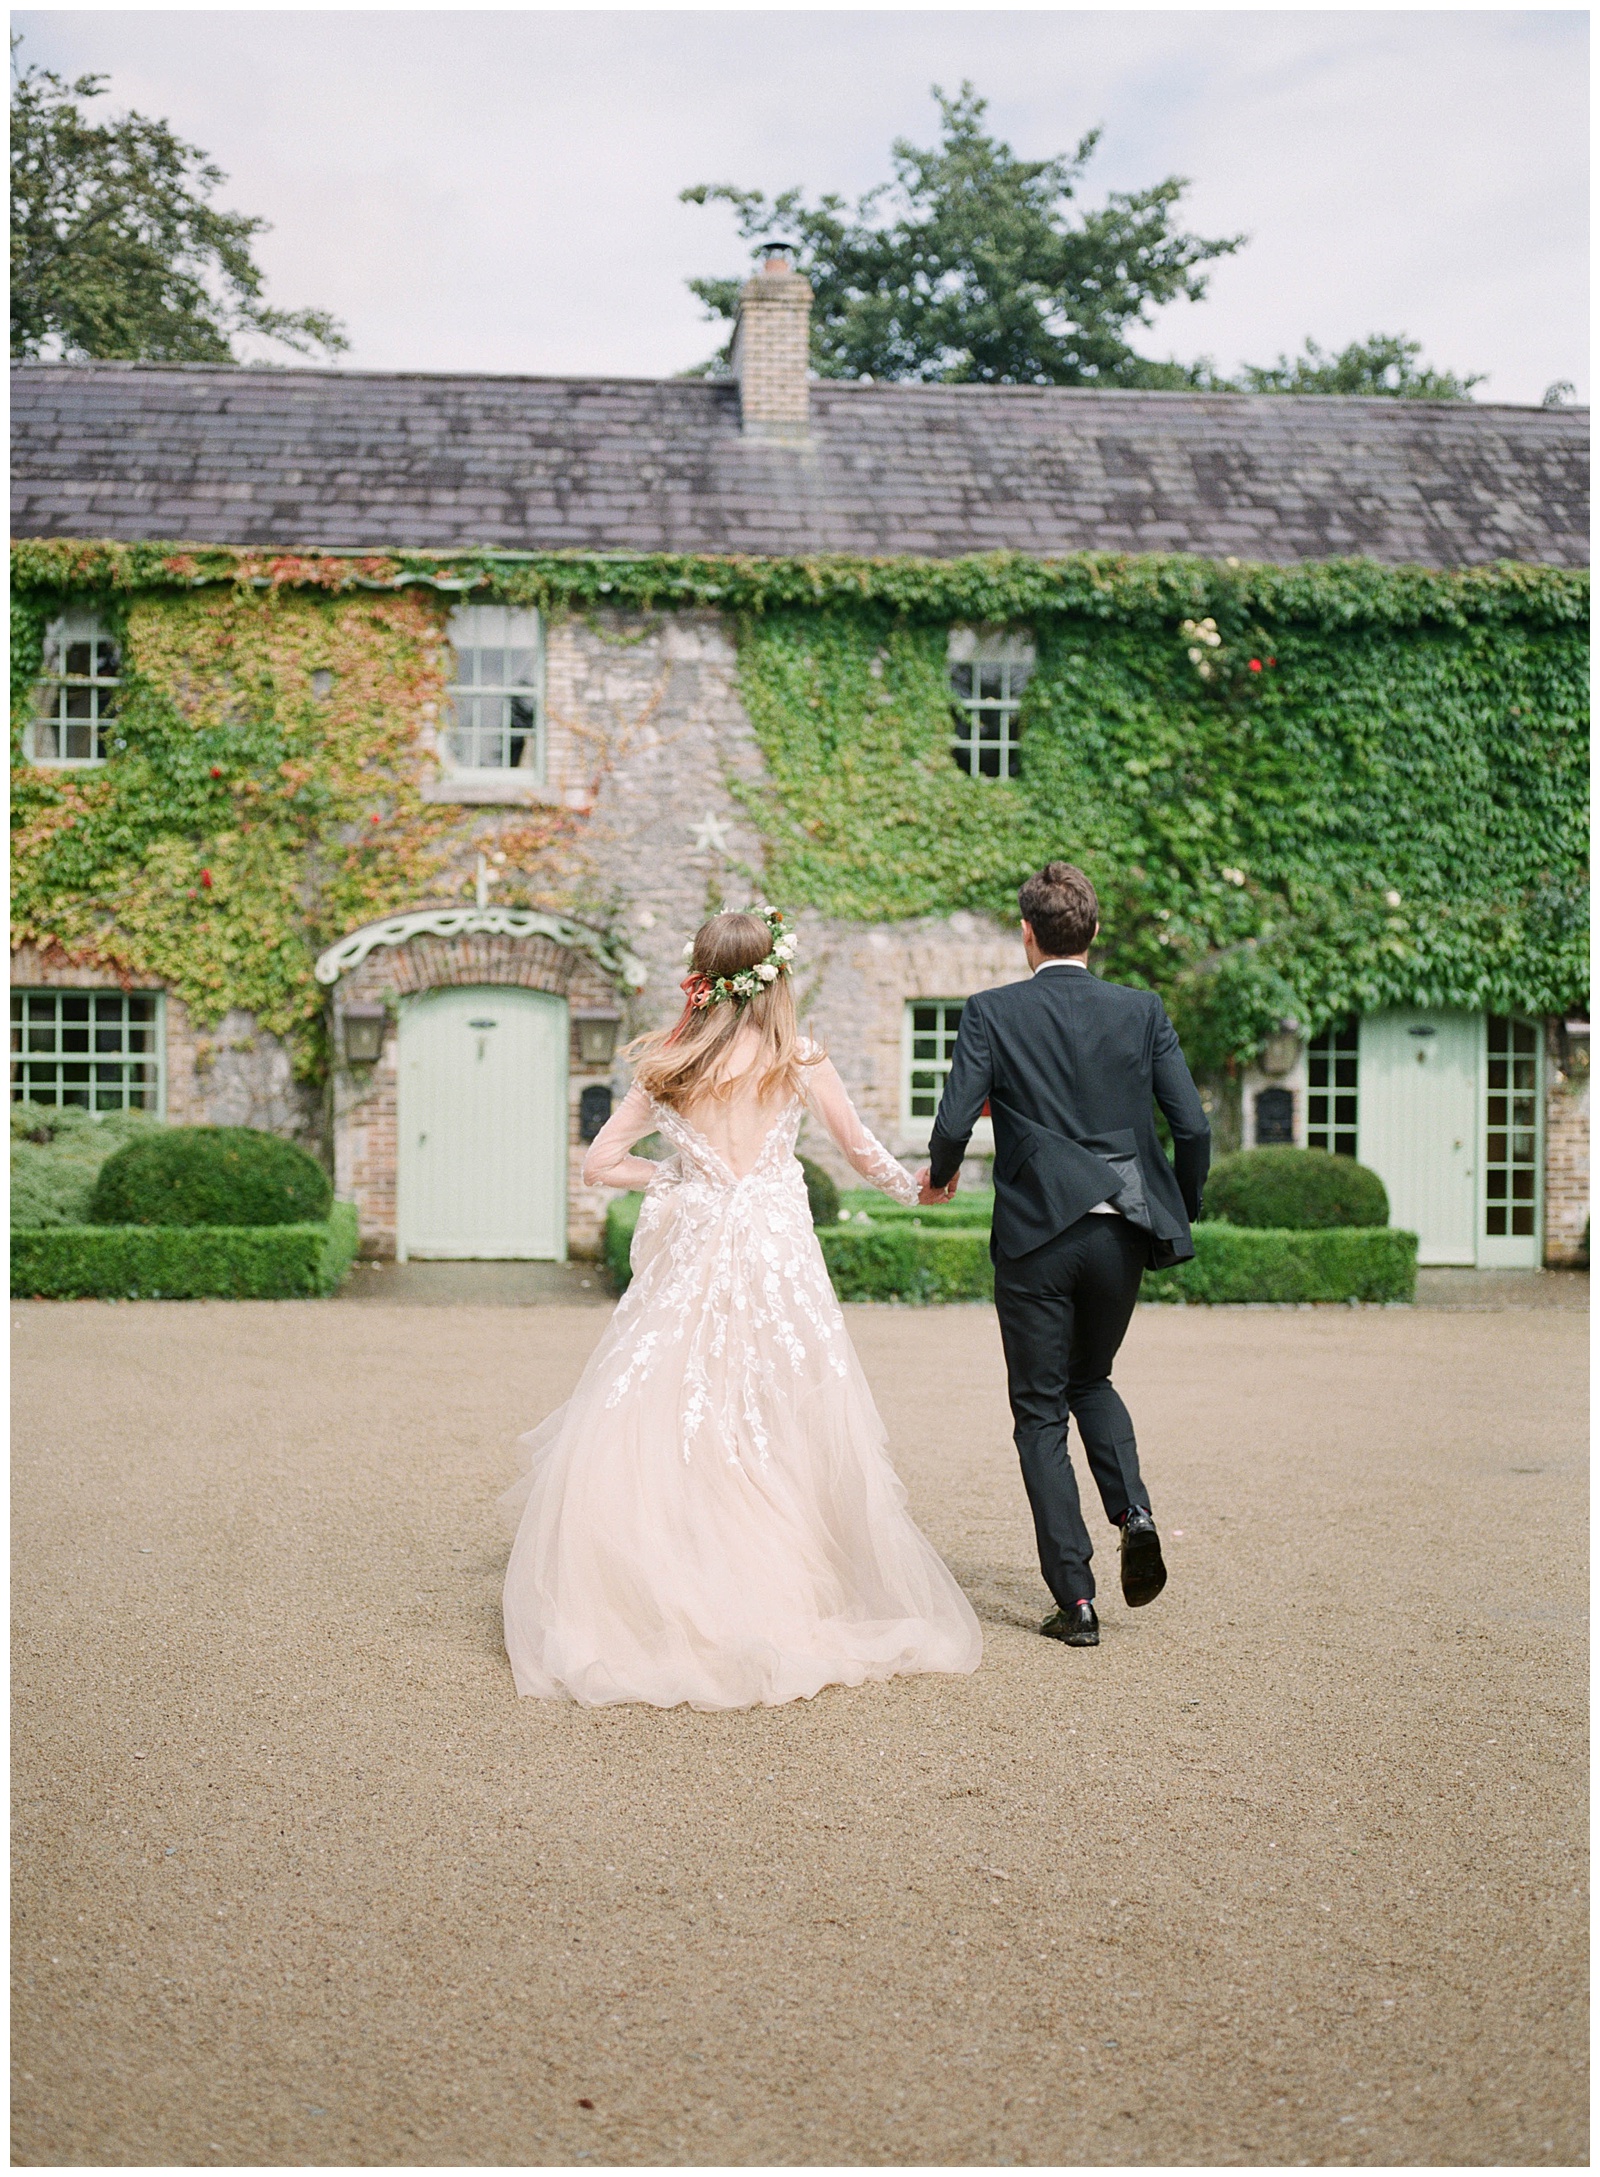 Destination Wedding Photographer | Ireland Destination Wedding Photography | Cliff at Lyons Wedding Photography | Sarah Sunstrom Photography_0044.jpg